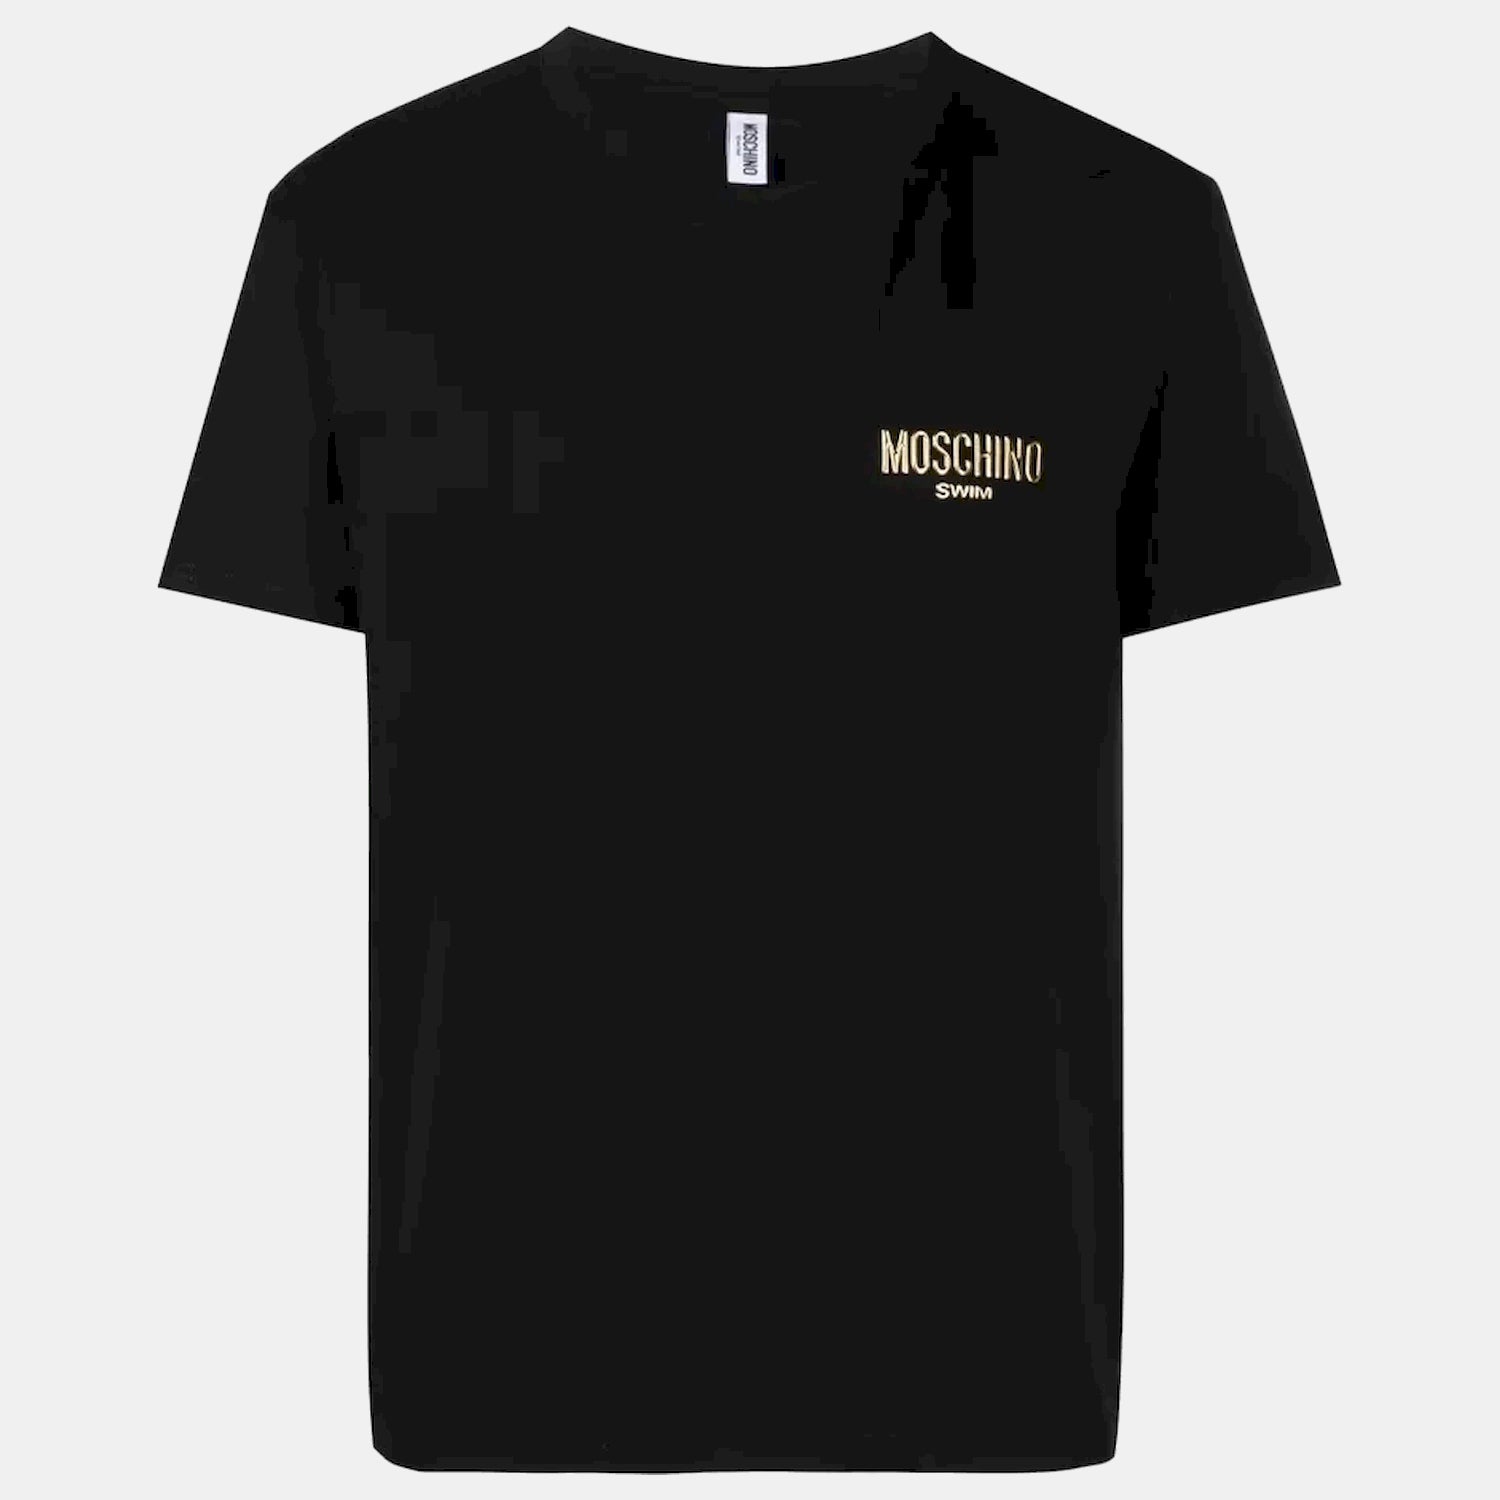 Moschino T Shirt A0716 9411 Black Preto_shot1